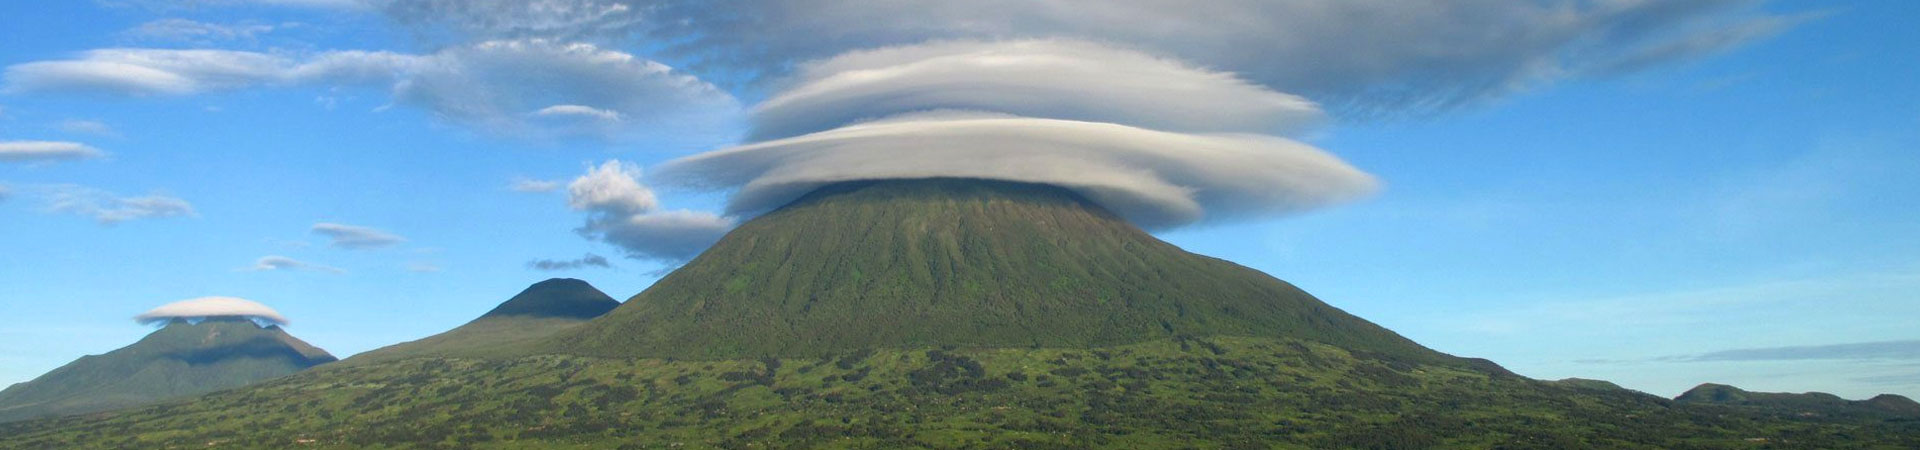 Rwanda-Safaris-Volcano-National-Park